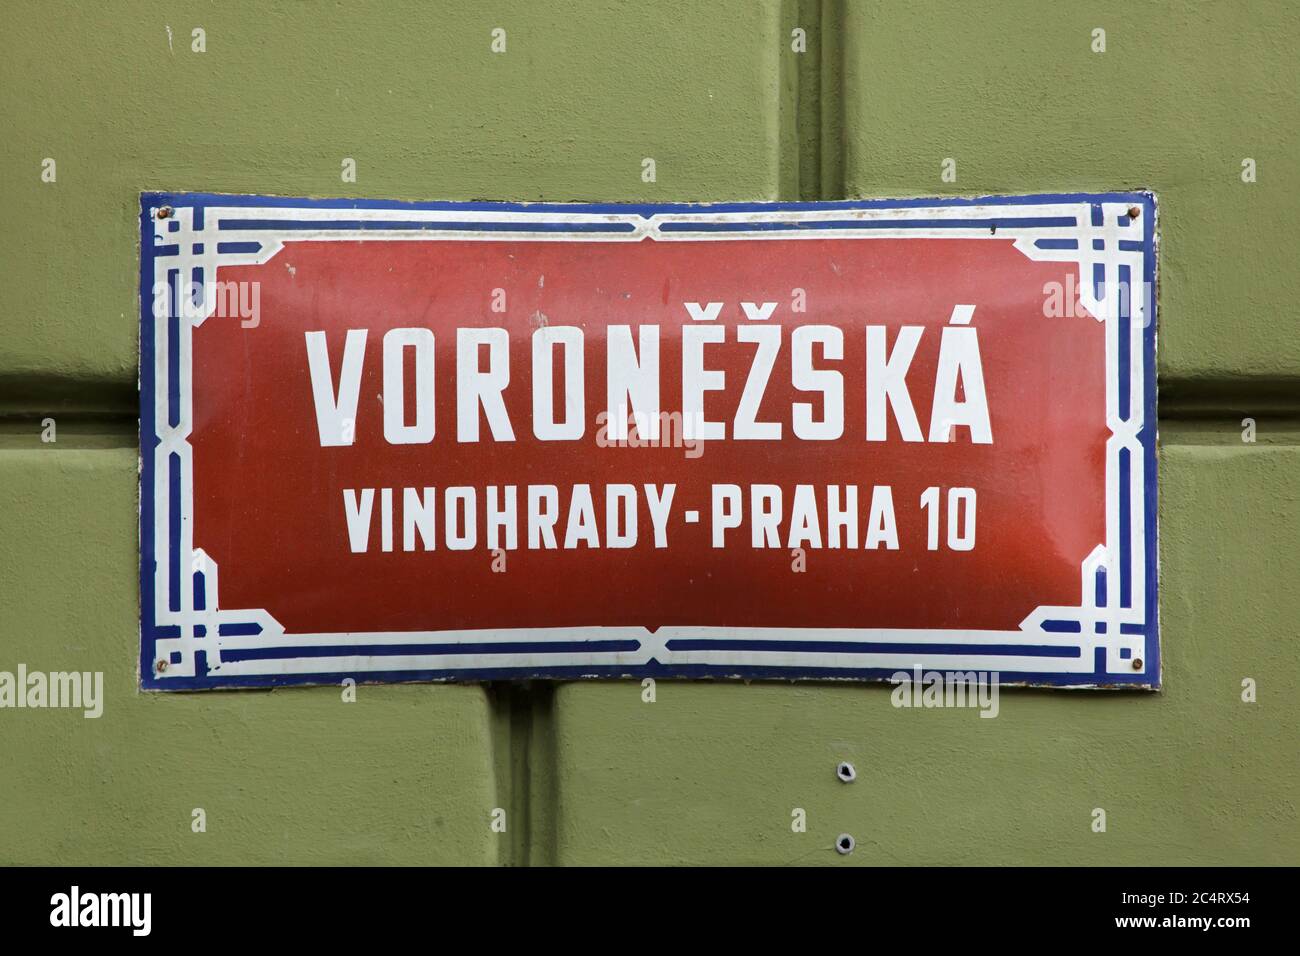 Voroněžská Street. Traditional red street sign in Vršovice district in Prague, Czech Republic. The street is named after the city of Voronezh (Voroněž) in Russia. Stock Photo